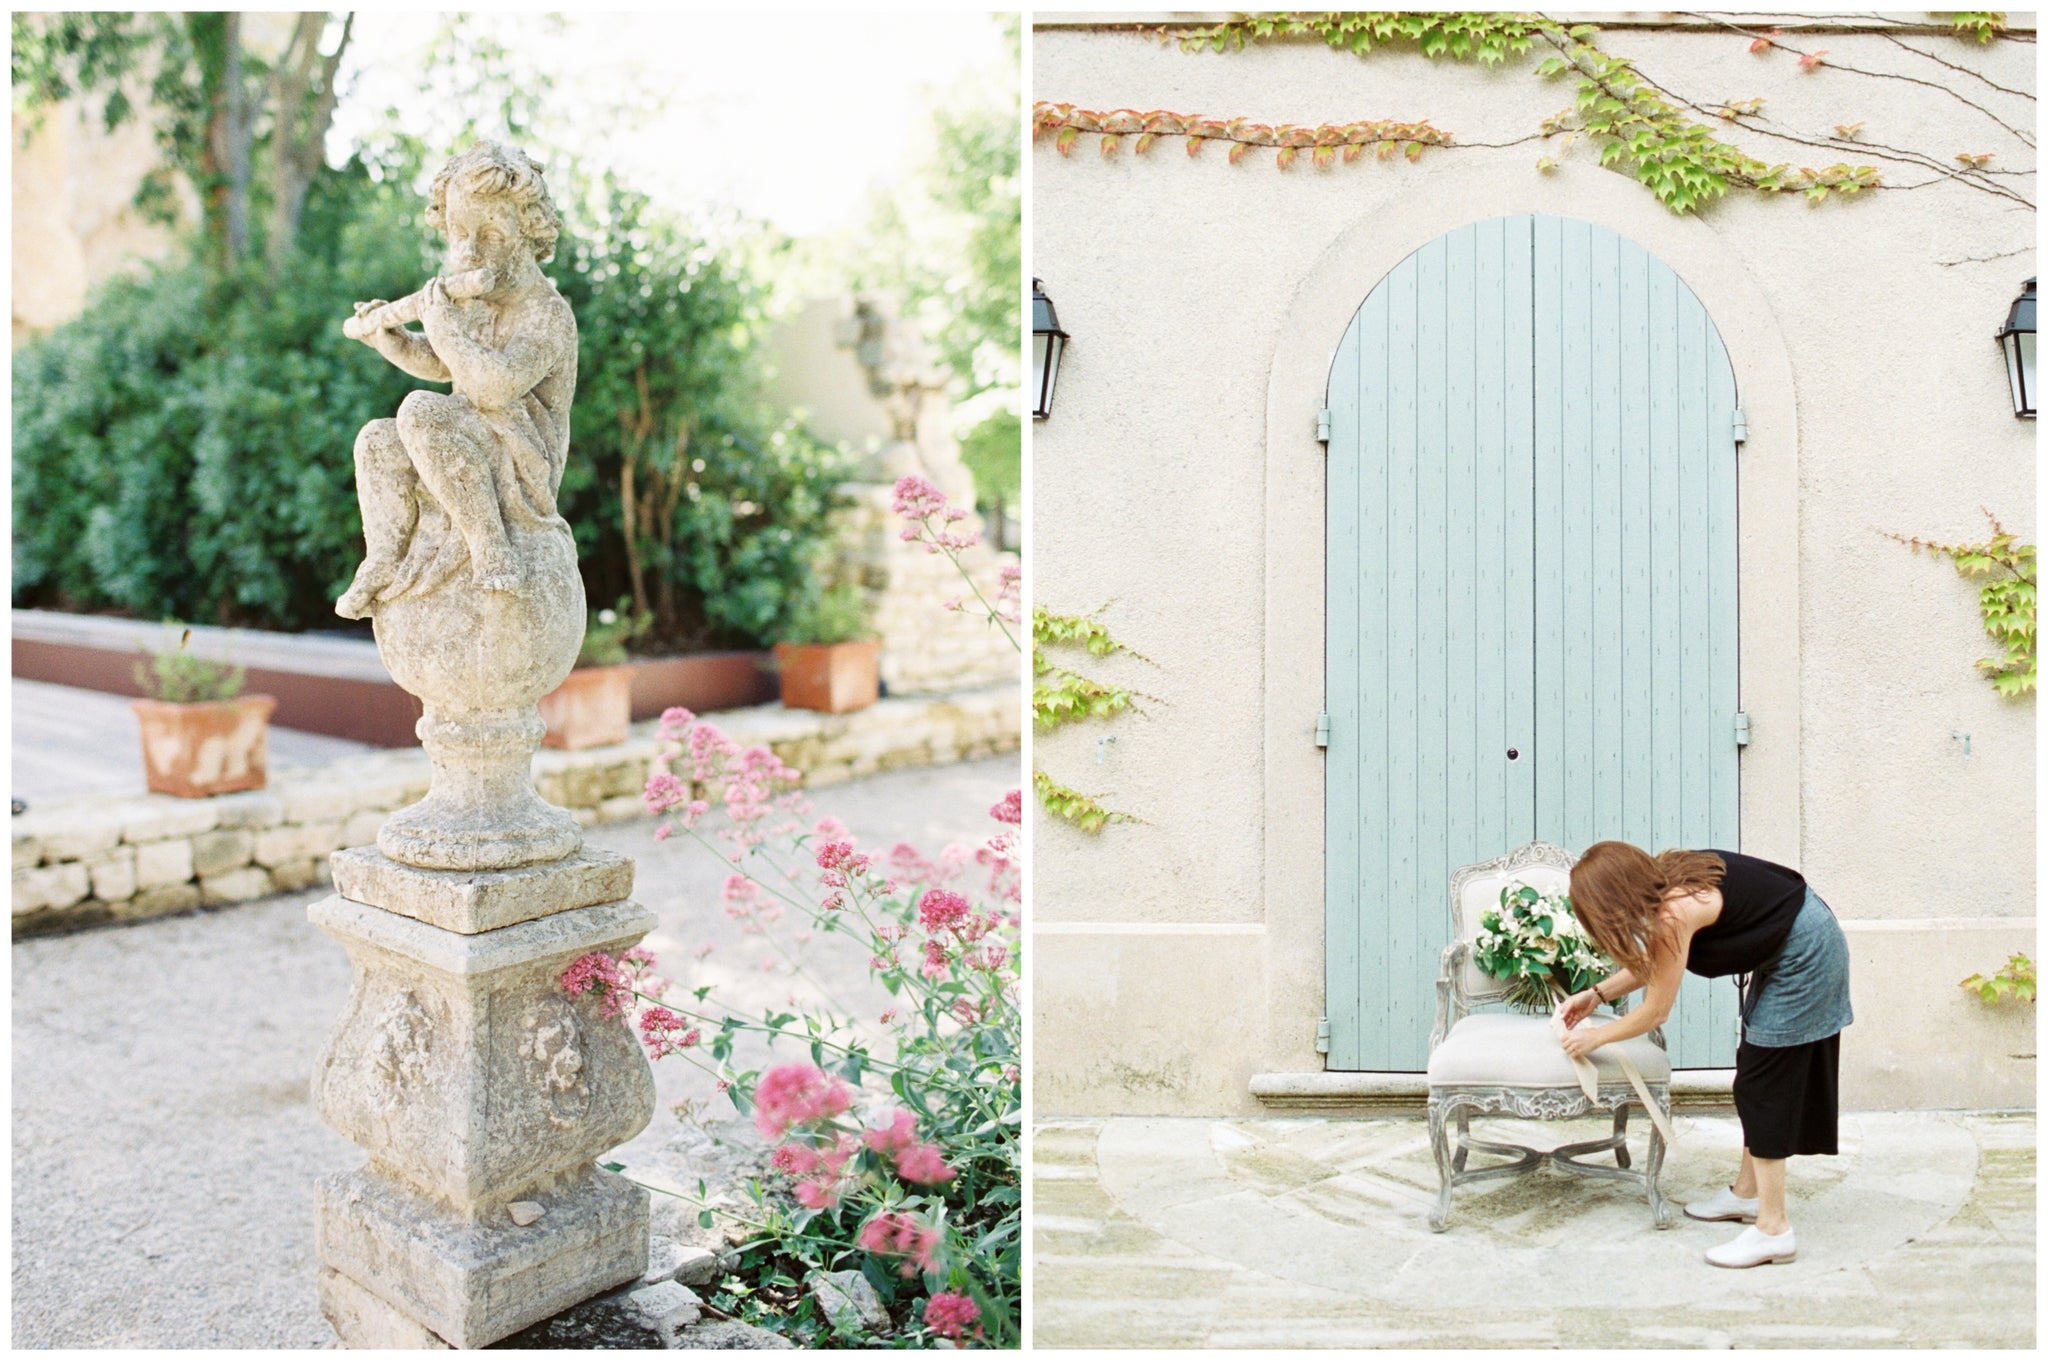 Katie Dean Jewelry, Provence, France Wedding, venue + flowers